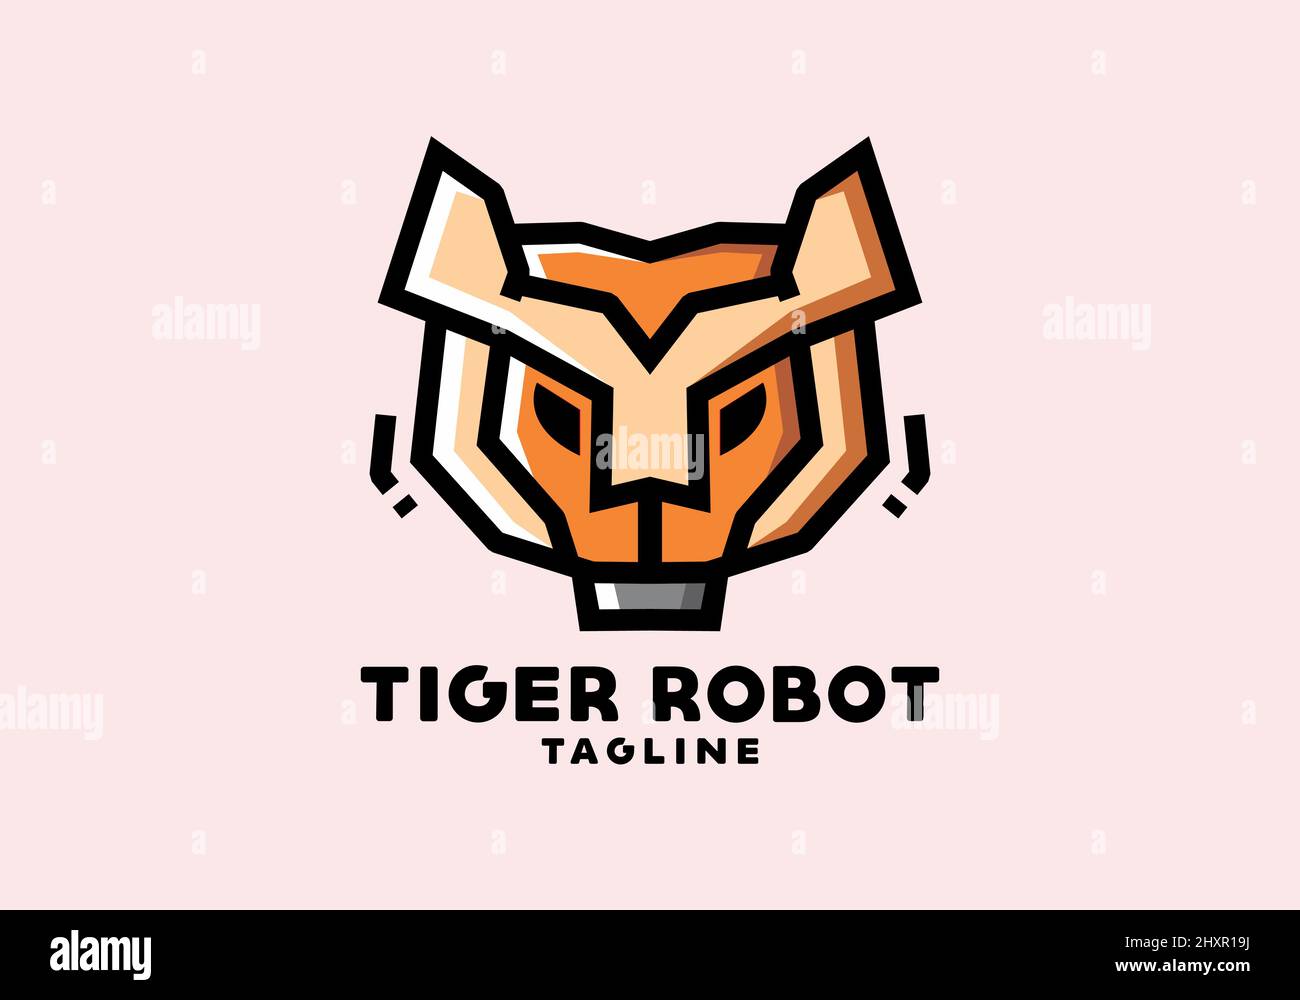 Stiff art style of tiger robot design Stock Vector